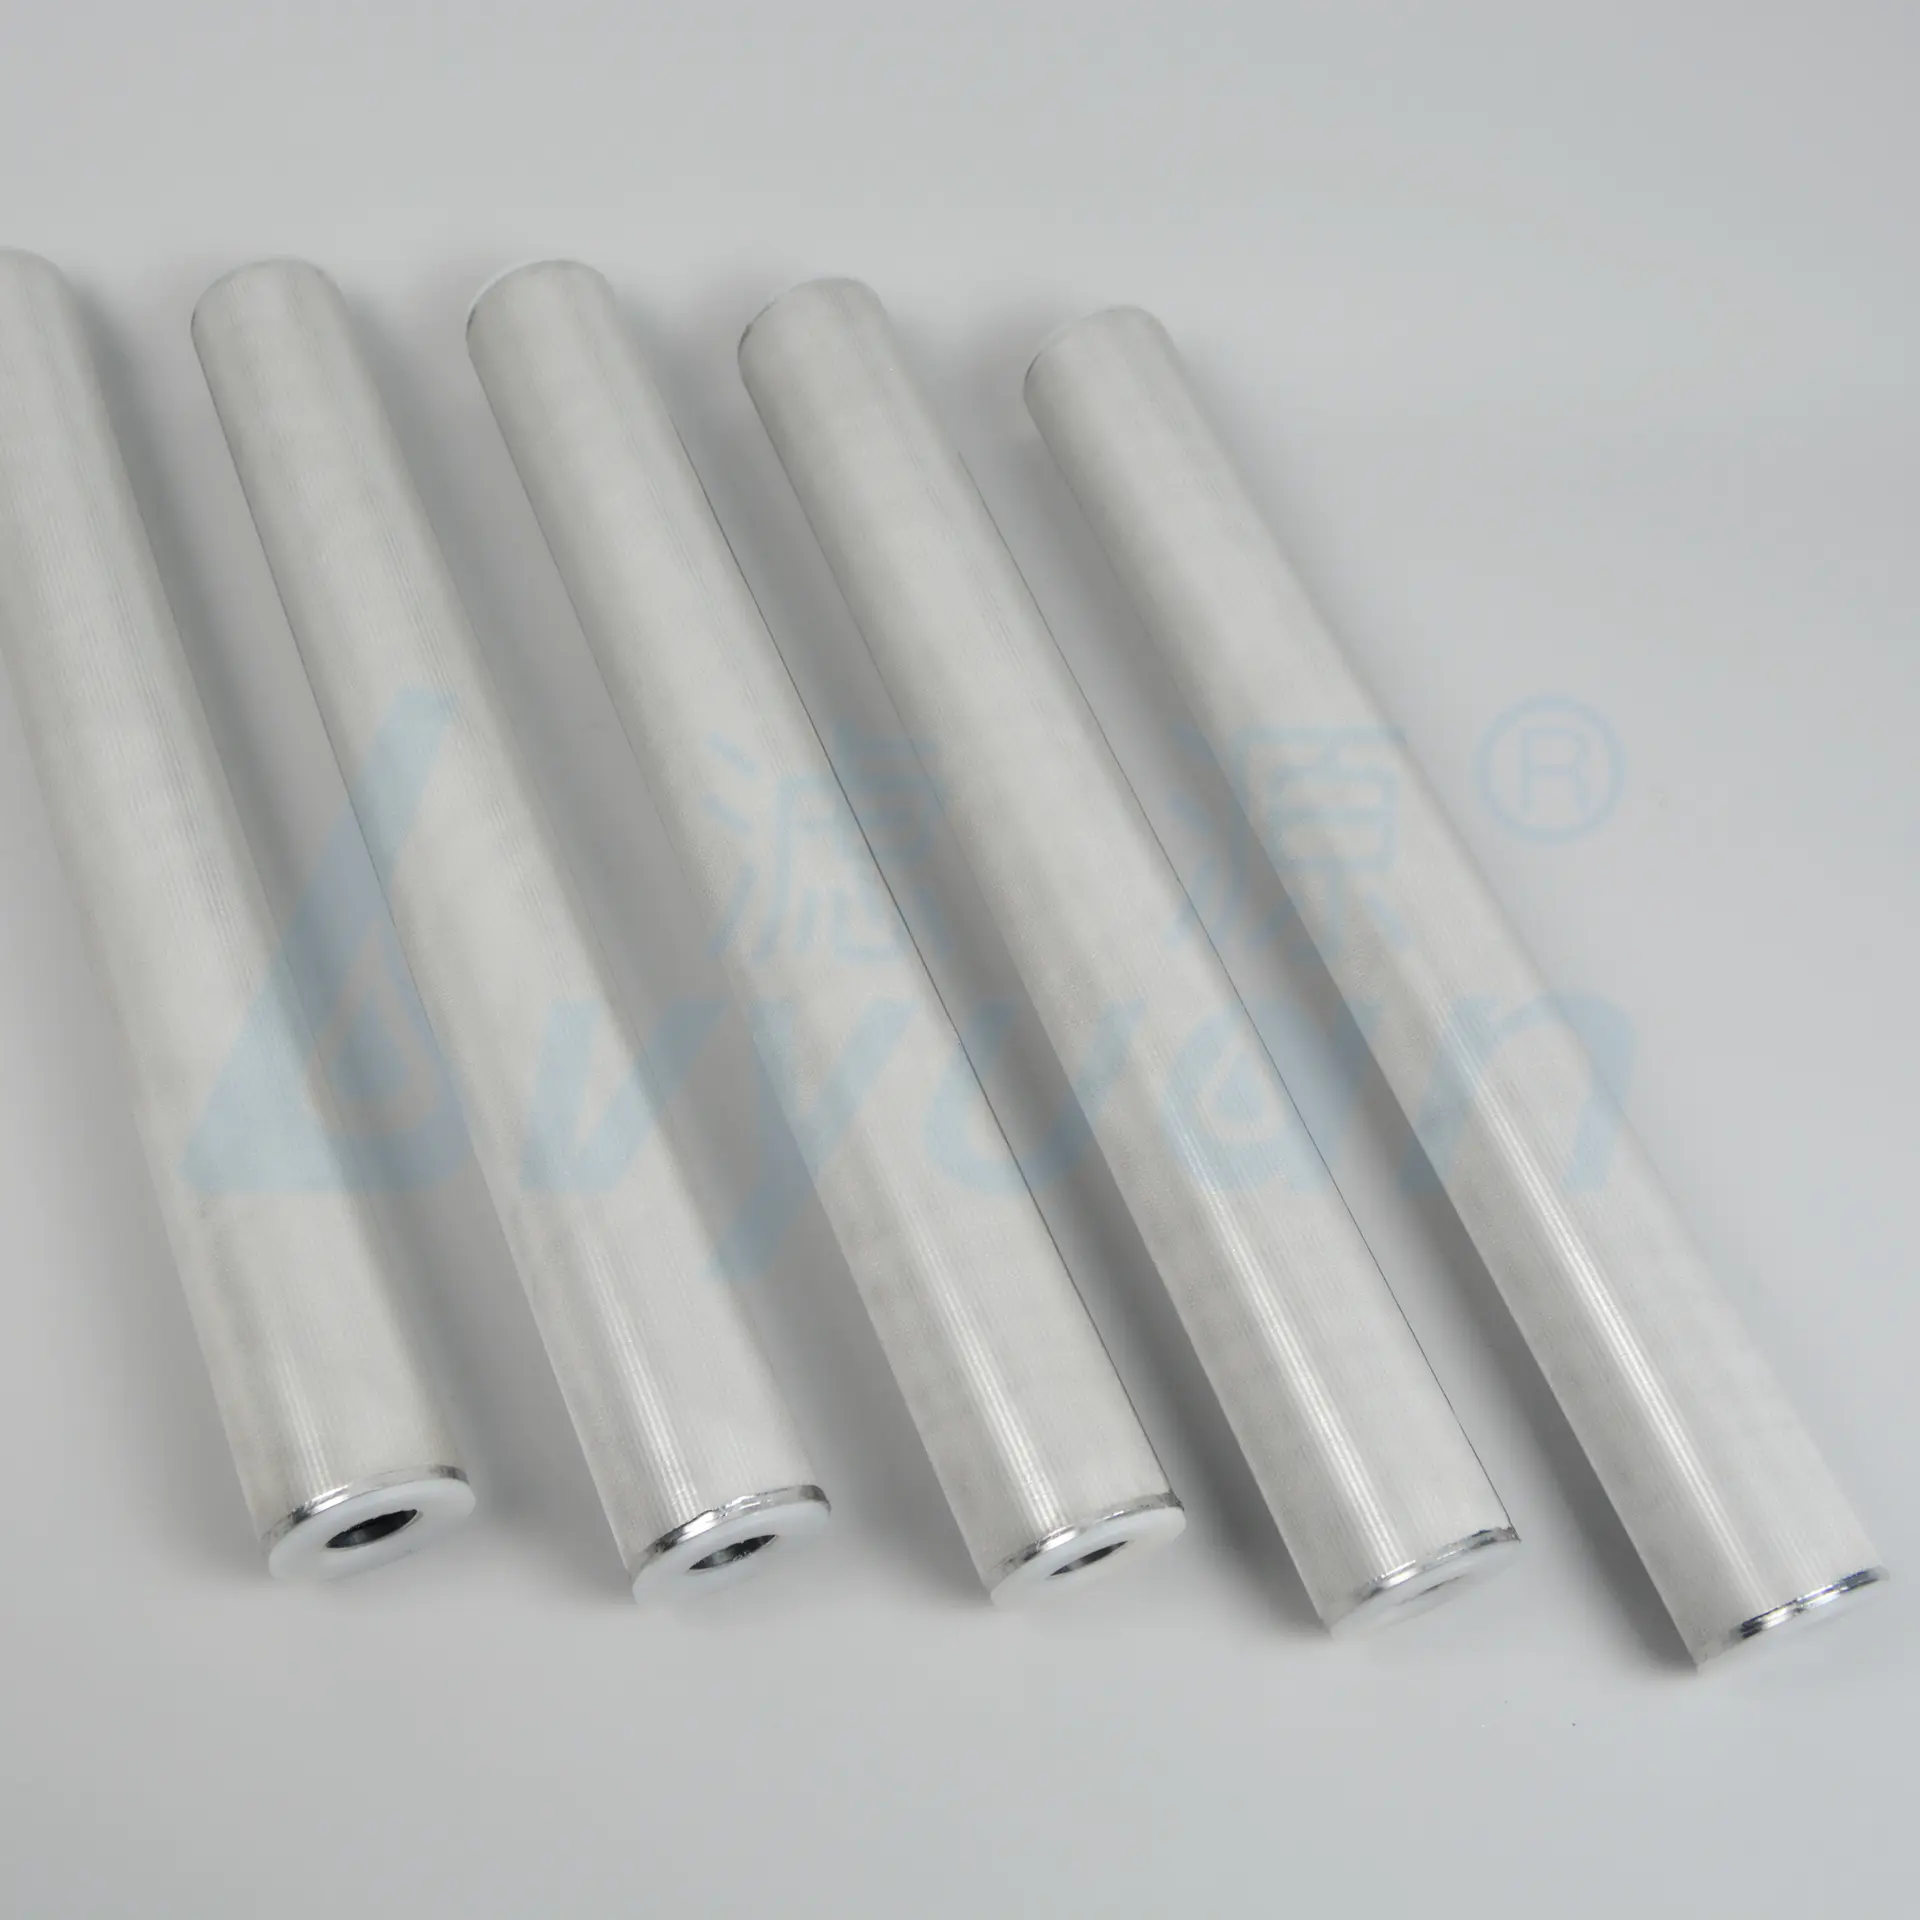 50 micron 100 micron stainless steel sintered mesh filter/porous metal filter cartridges 40 inch